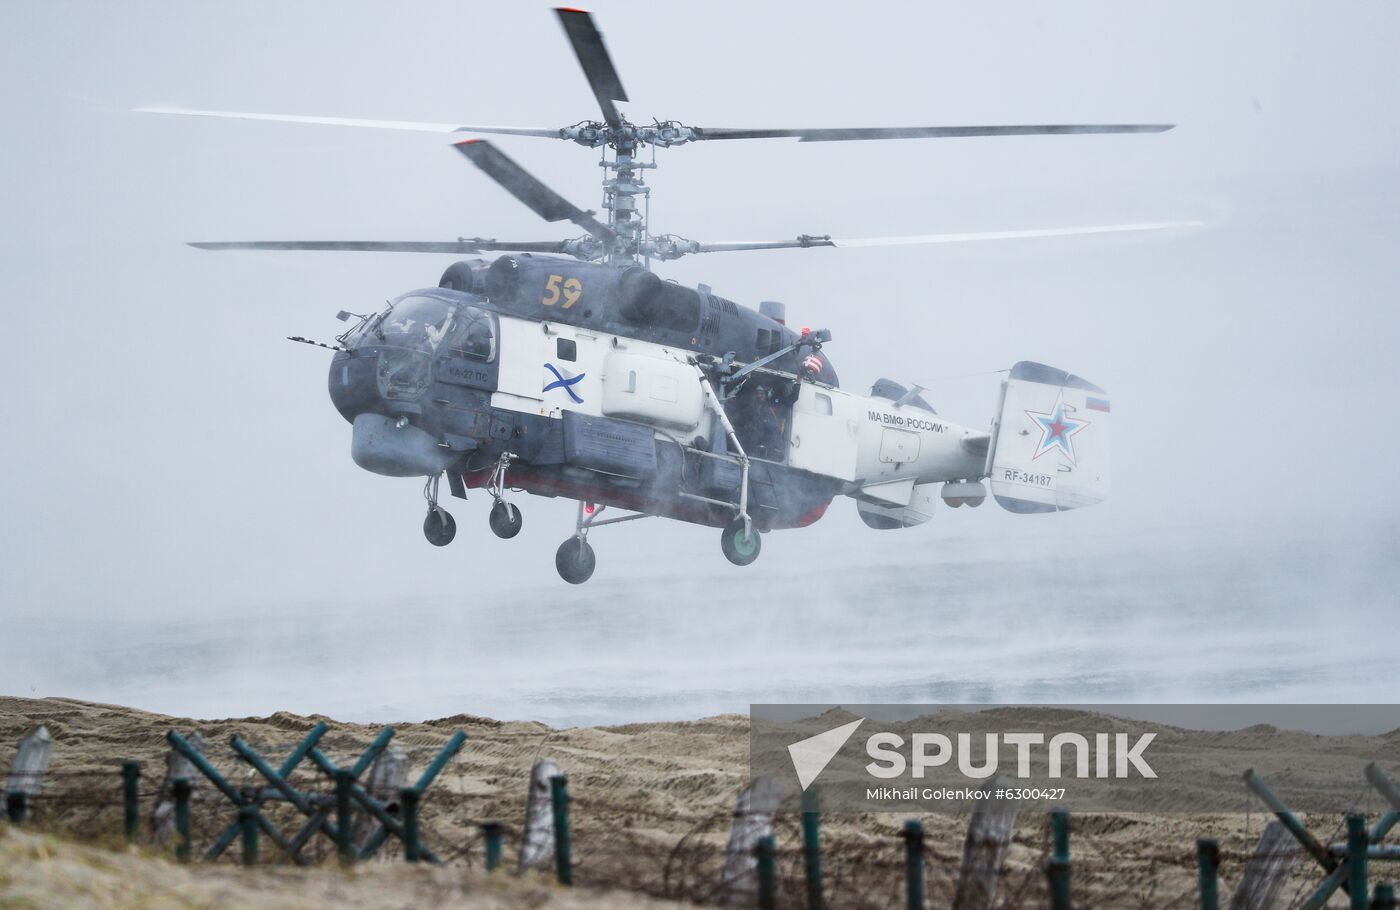 Russia Naval Landing Drill